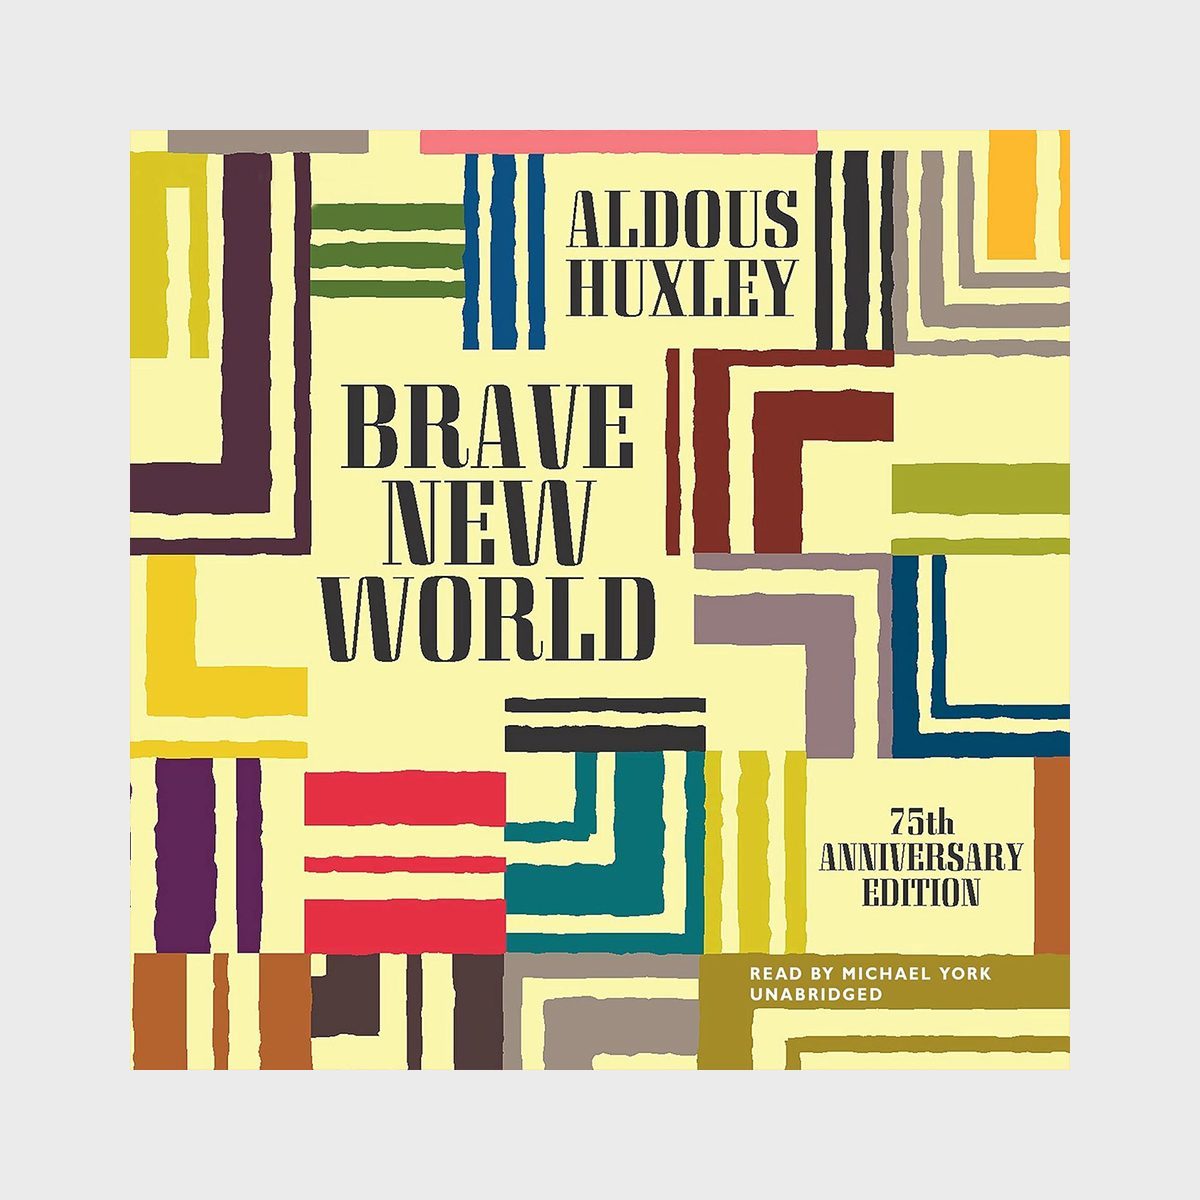 Brave New World By Aldous Huxley Ecomm Via Amazon.com